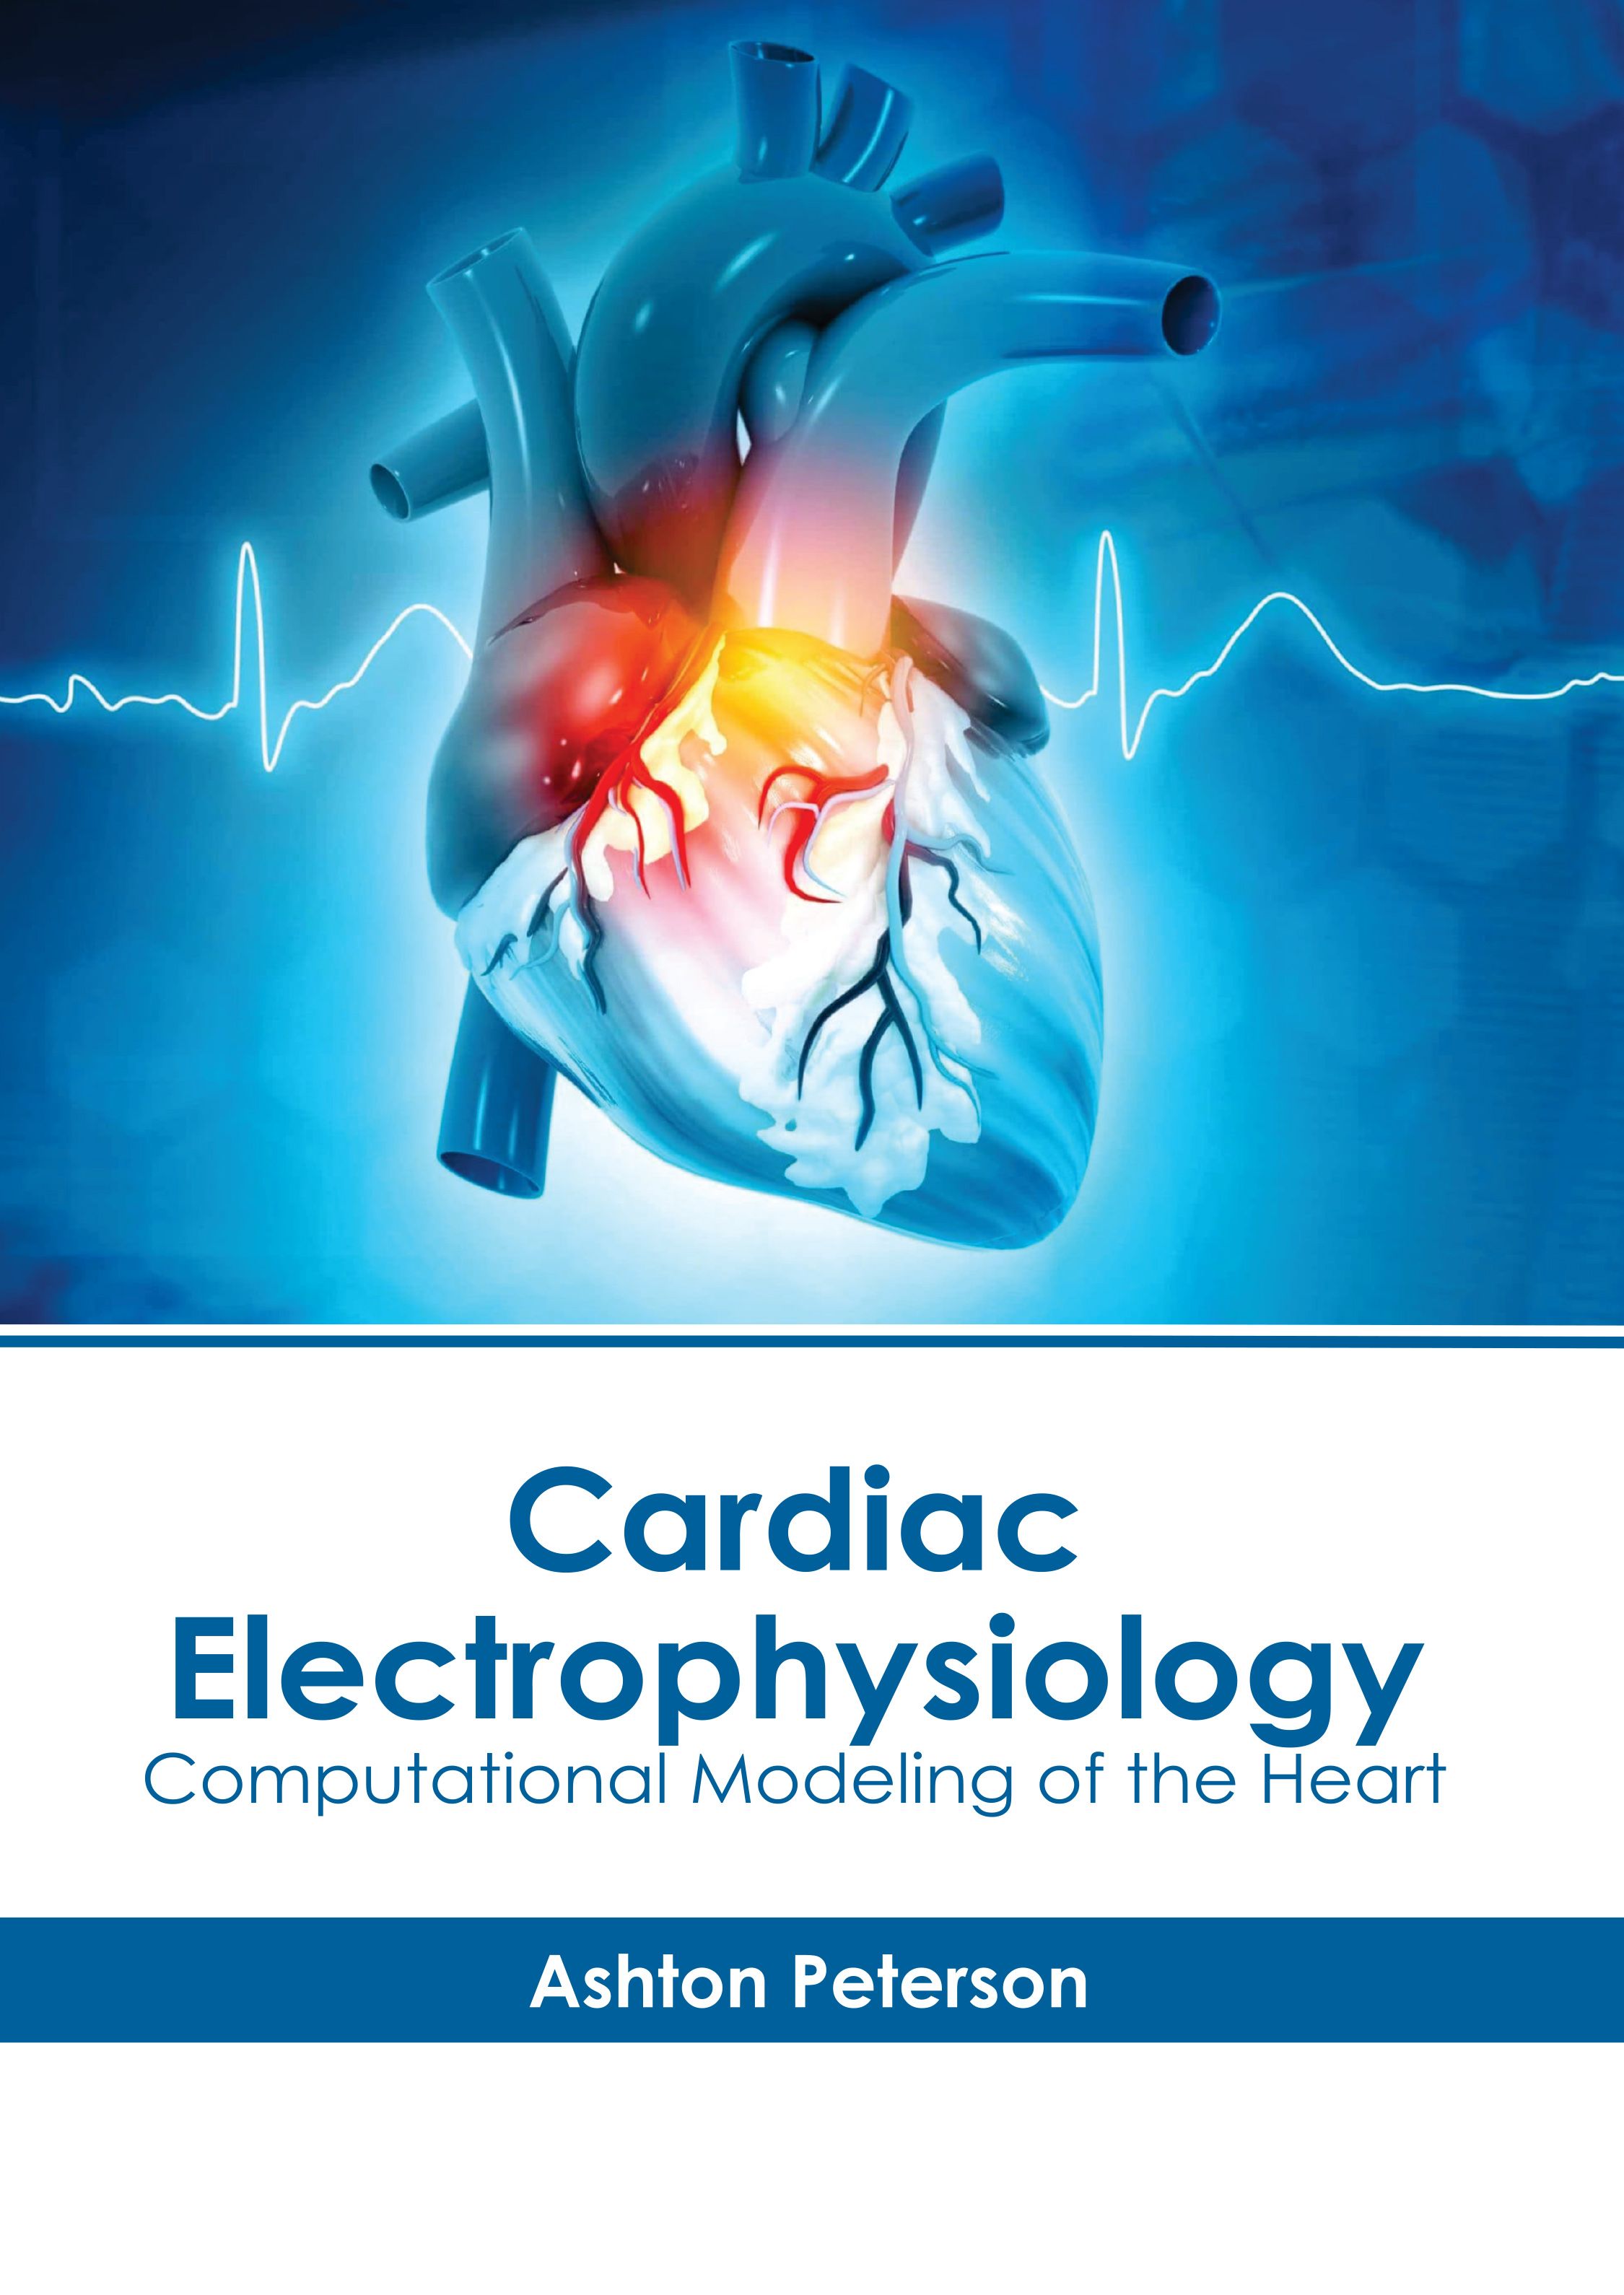 CARDIAC ELECTROPHYSIOLOGY: COMPUTATIONAL MODELING OF THE HEART